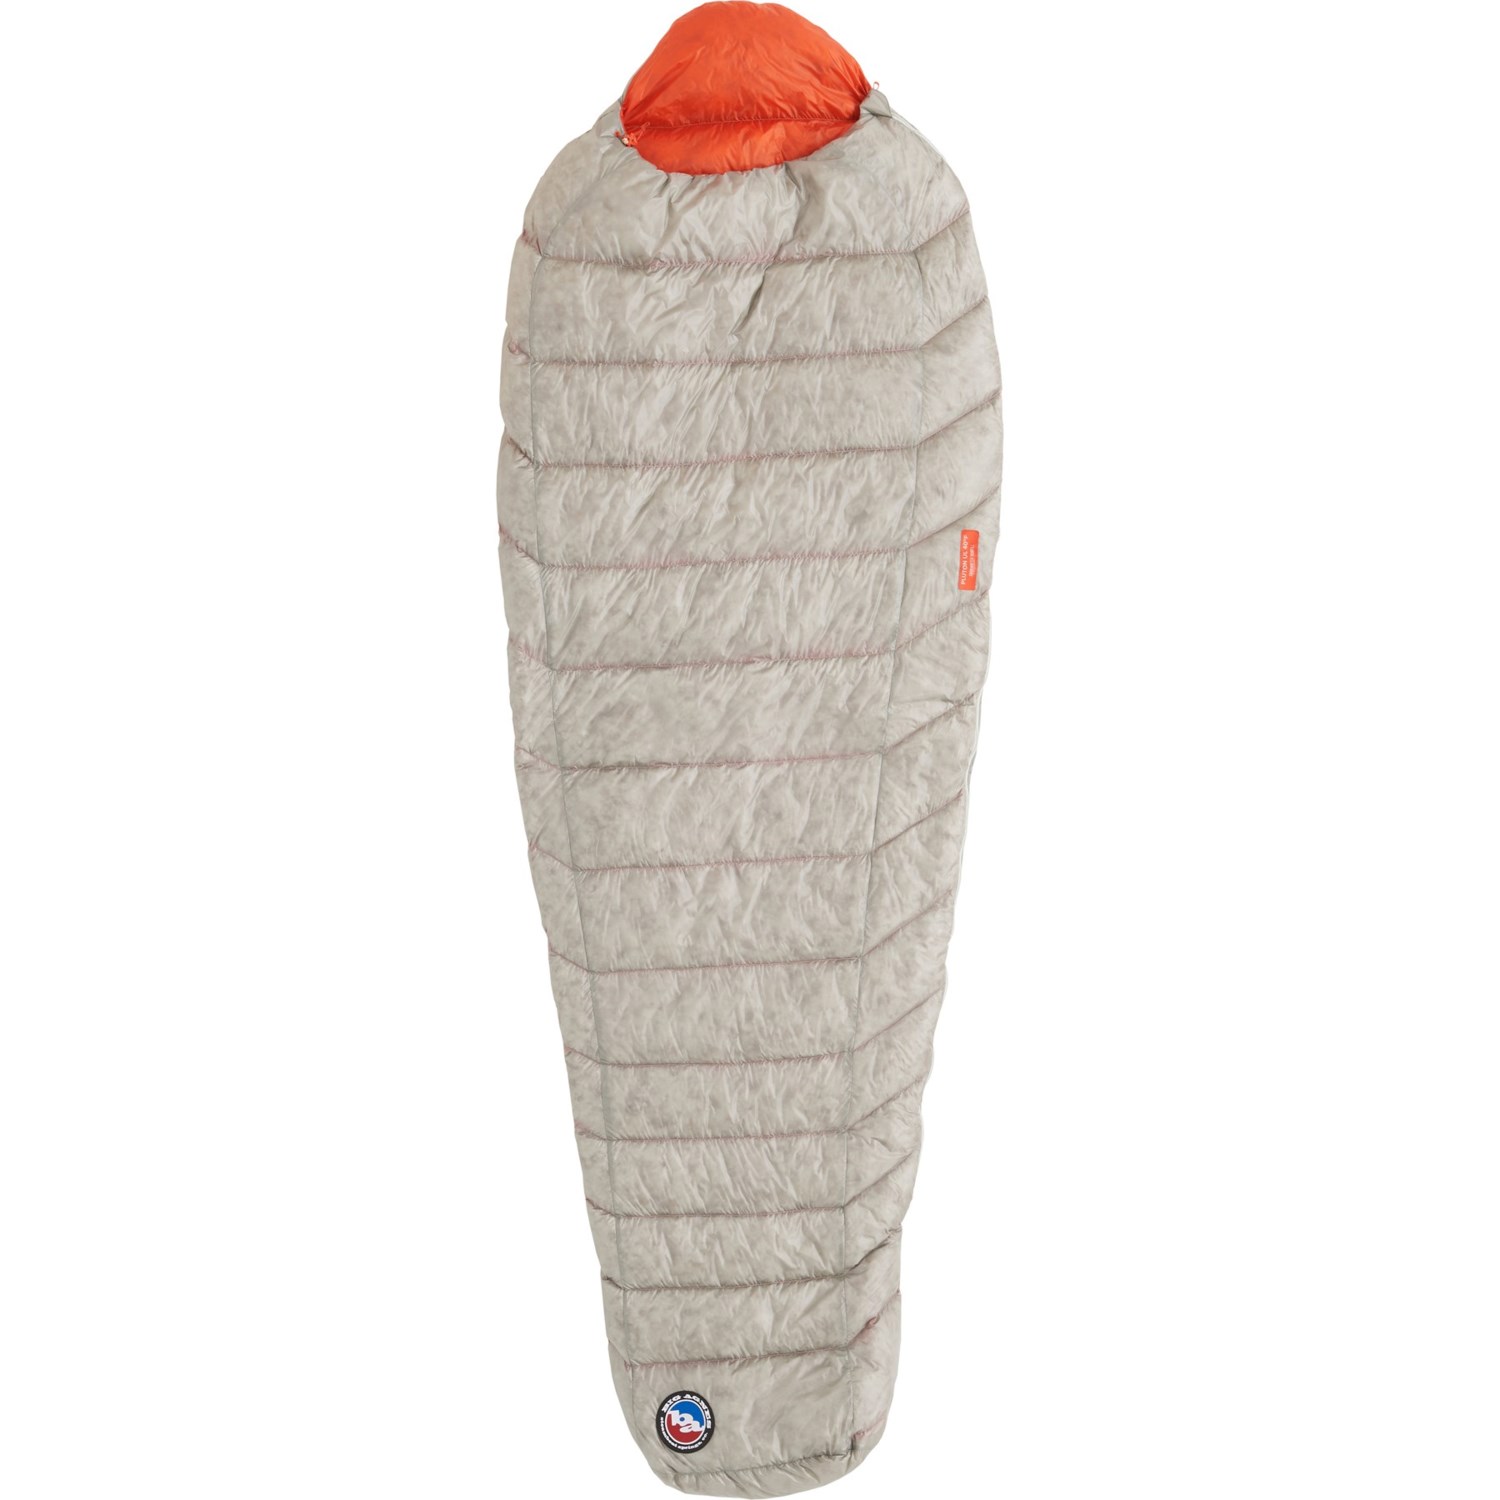 Big Agnes 40°F Pluton Ultralight Sleeping Bag - Mummy - Save 27%